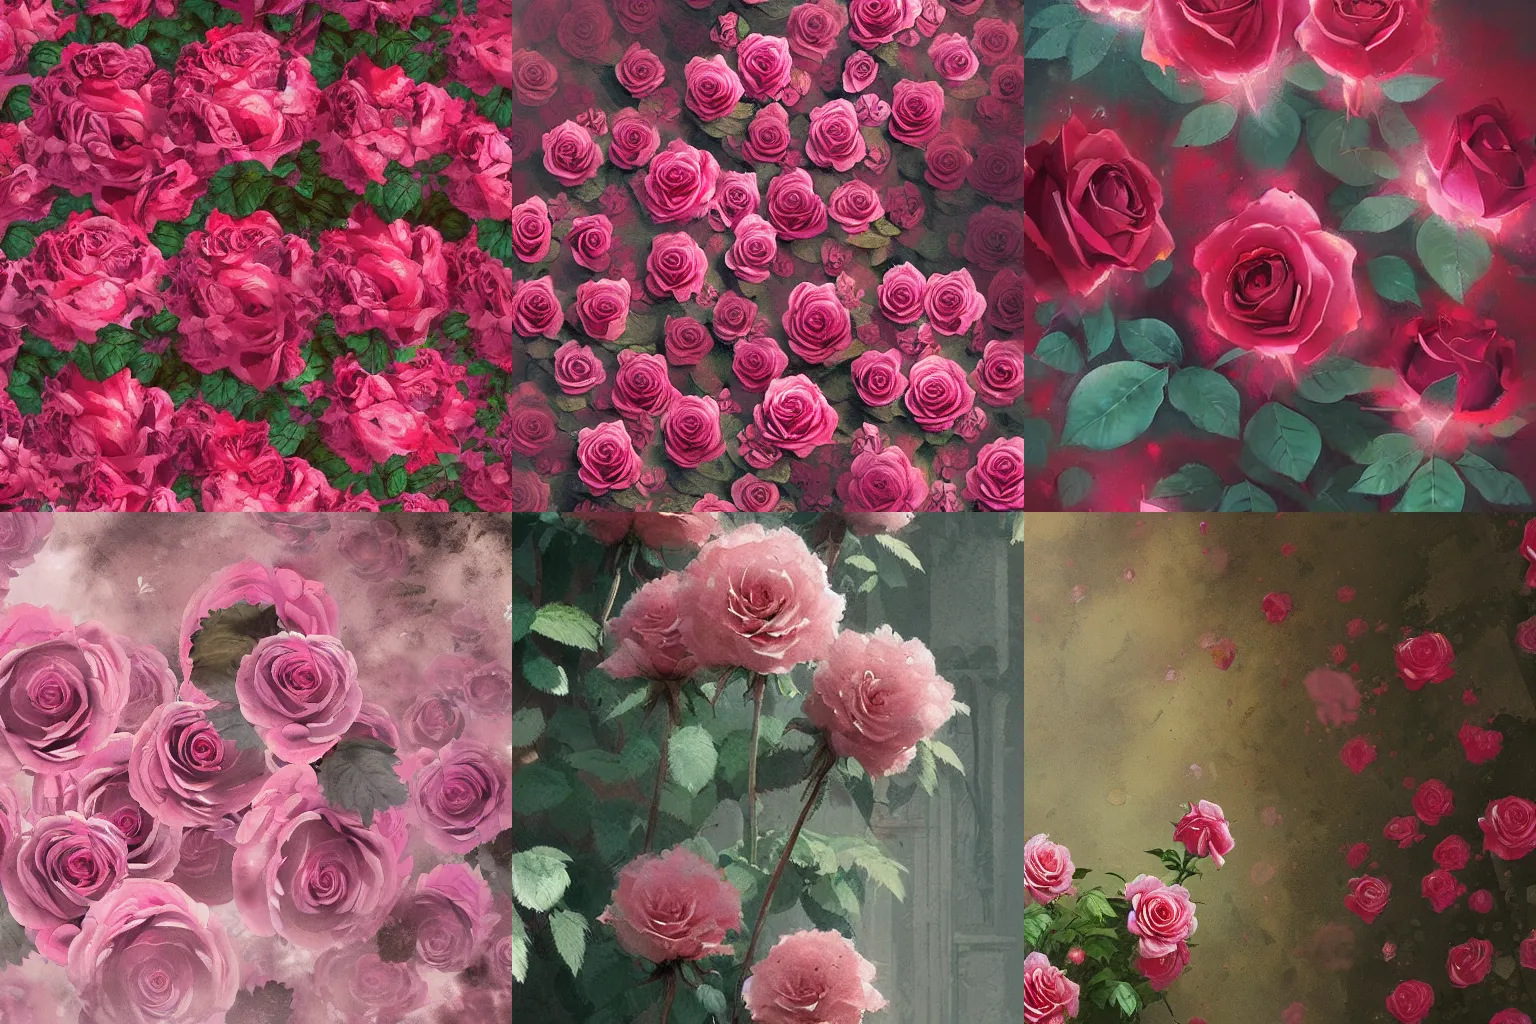 Prompt: floral rose background by Greg rutkowski